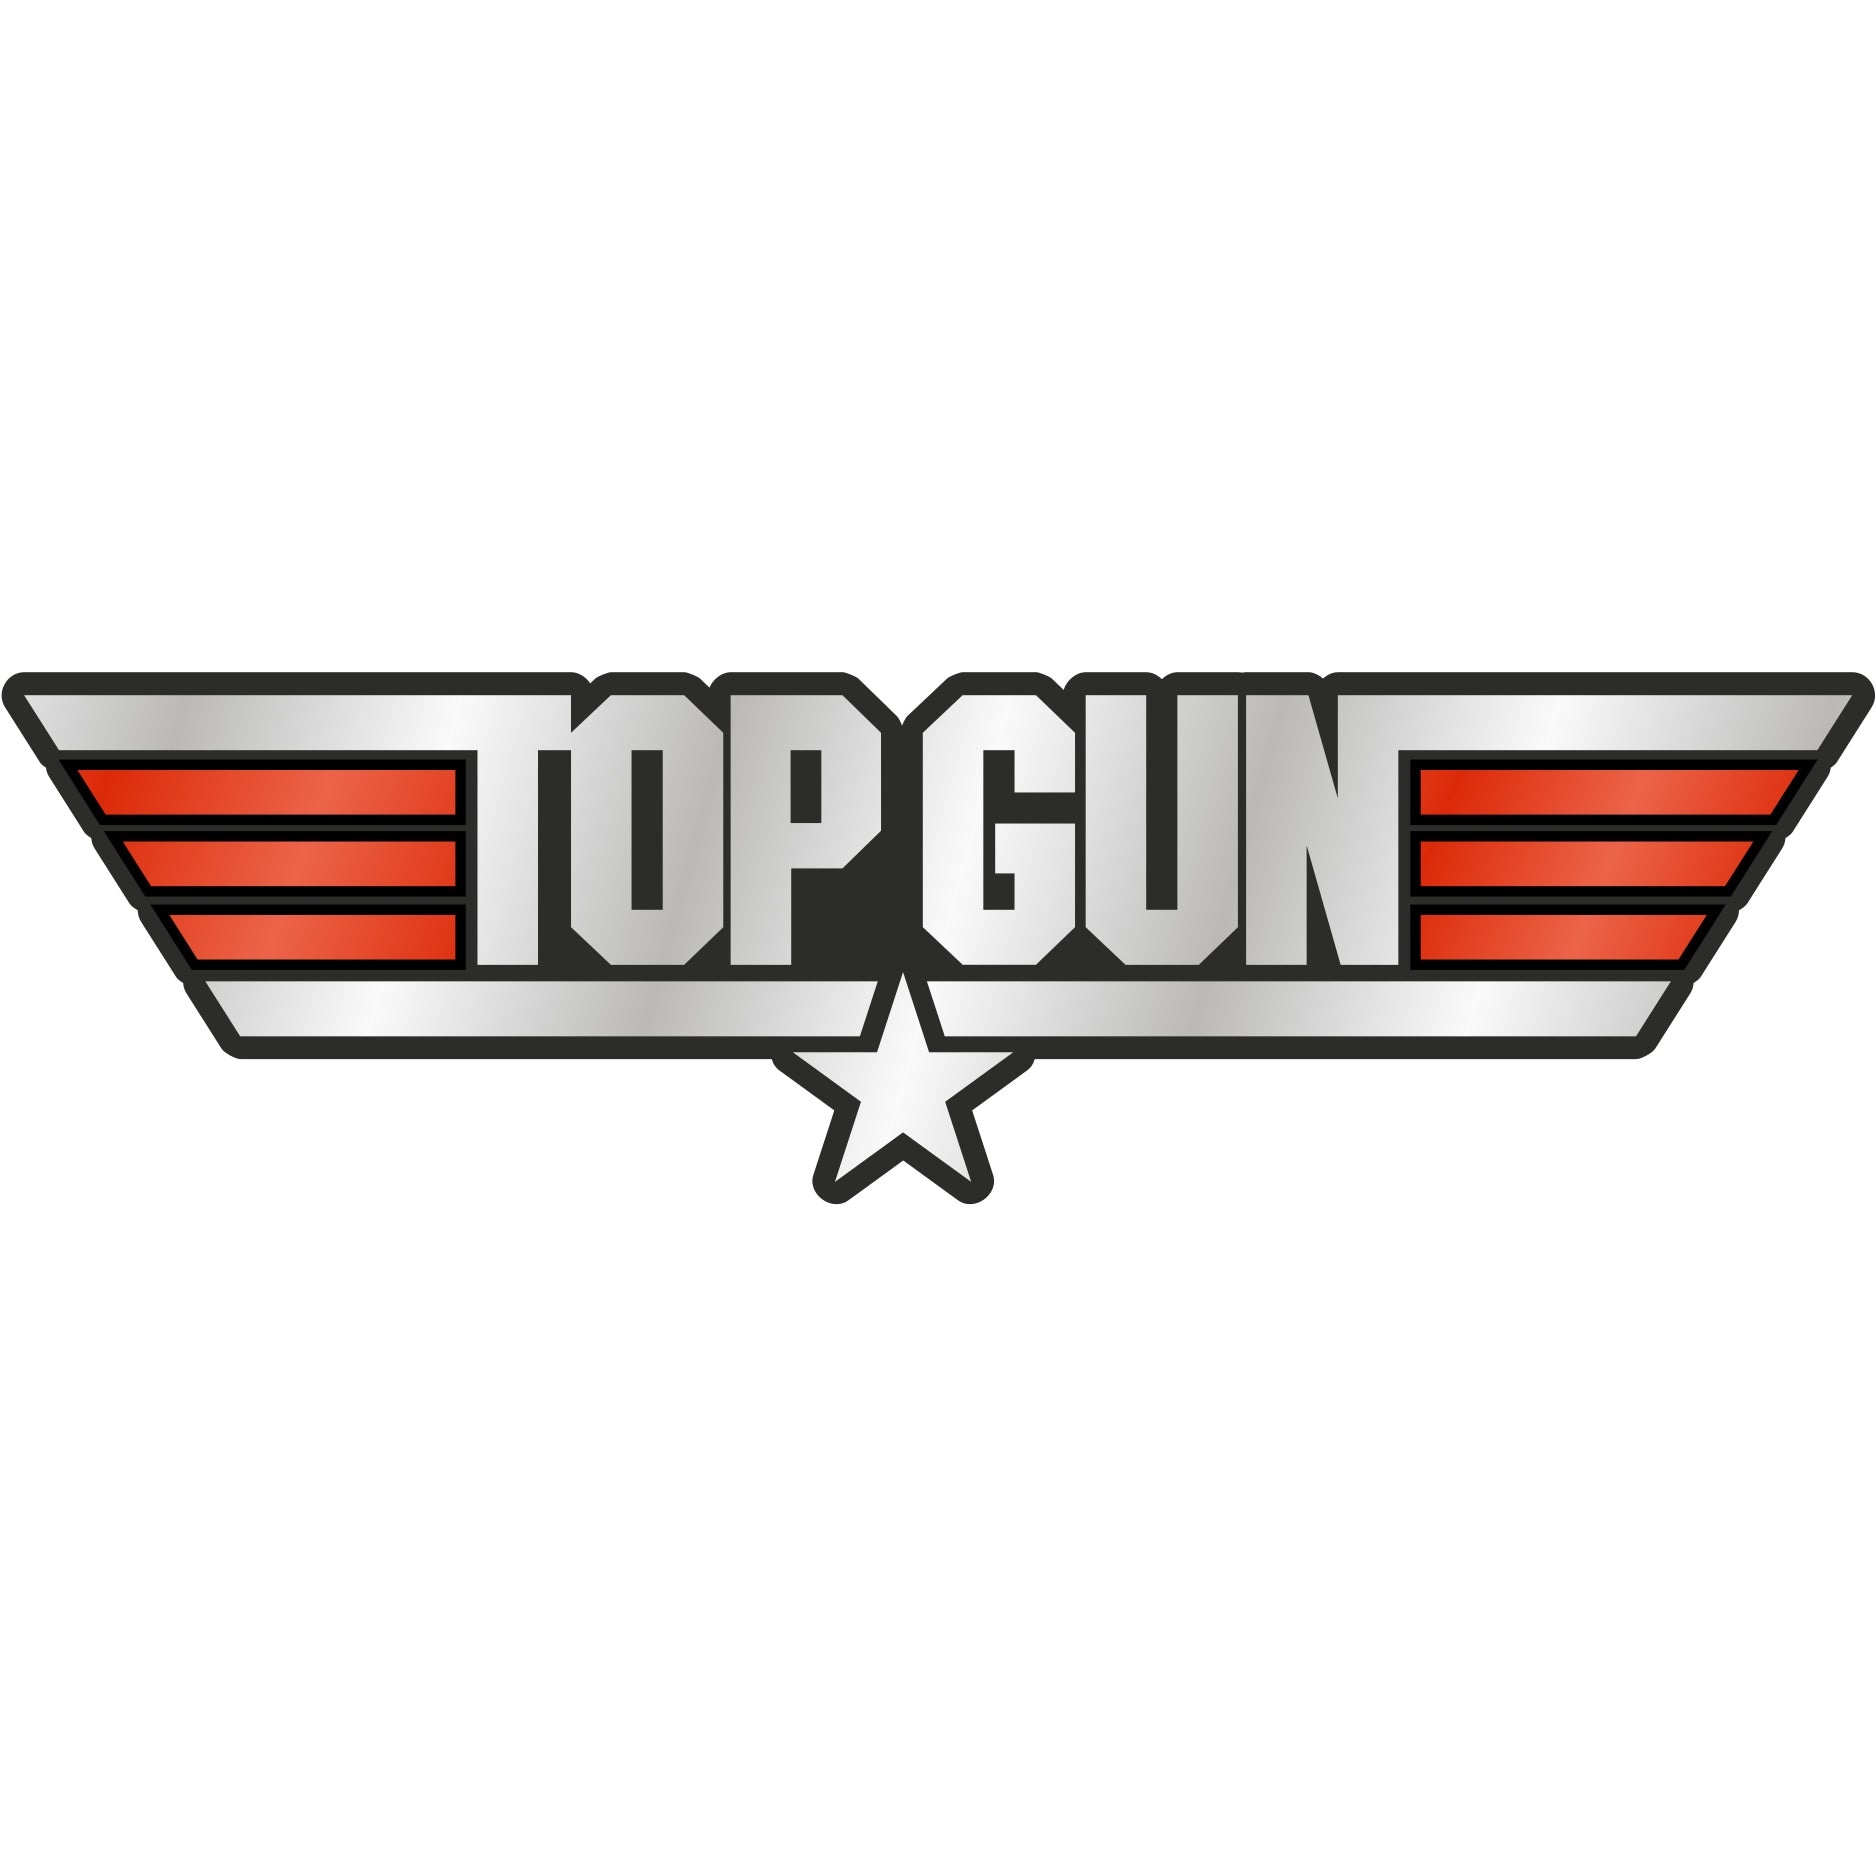 Top Gun movie logo